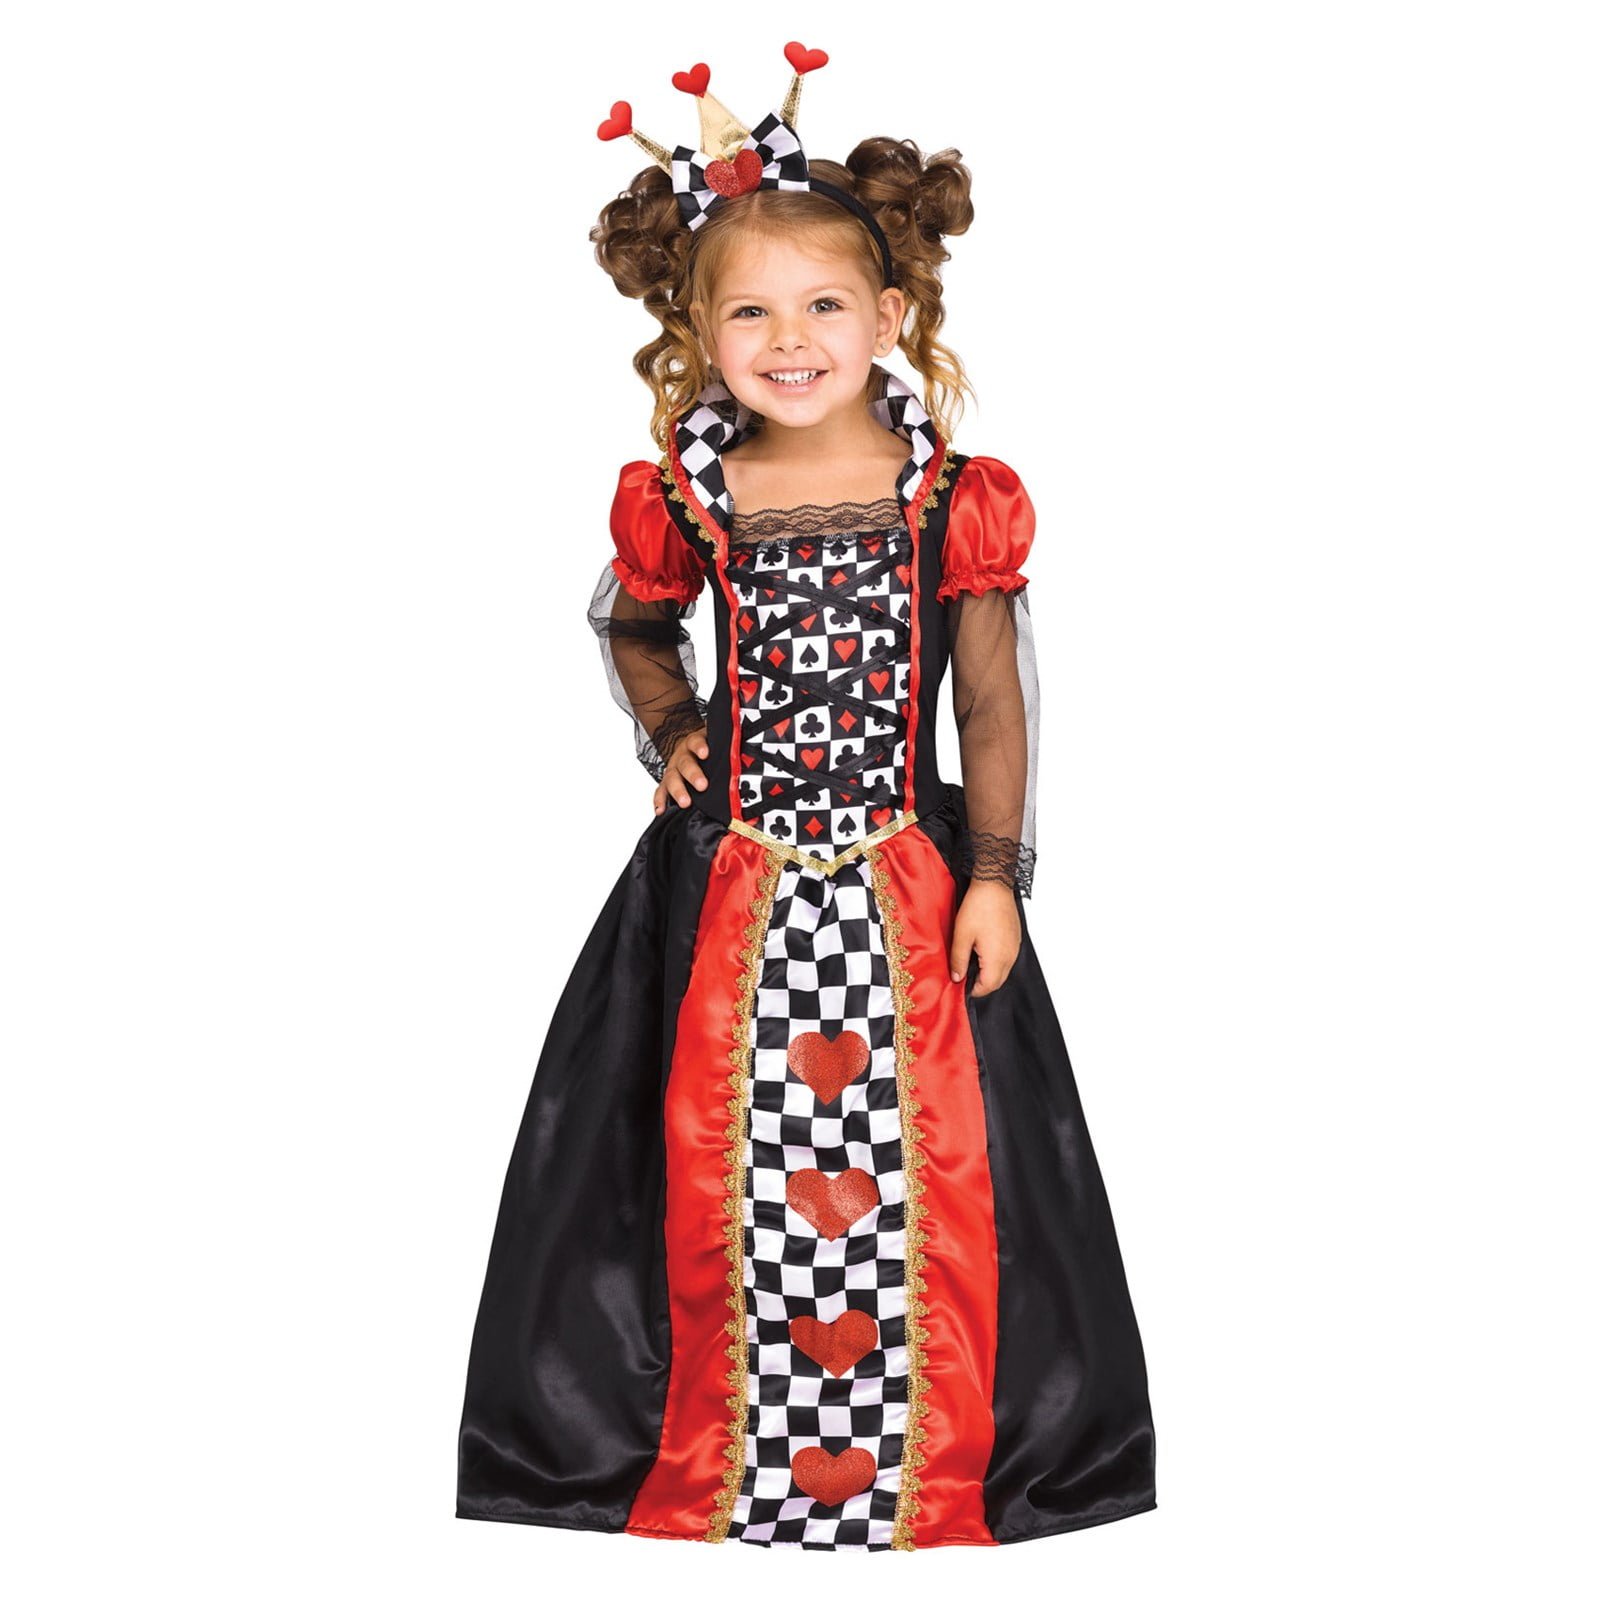 Red Queen Costume for Girls - Walmart.com